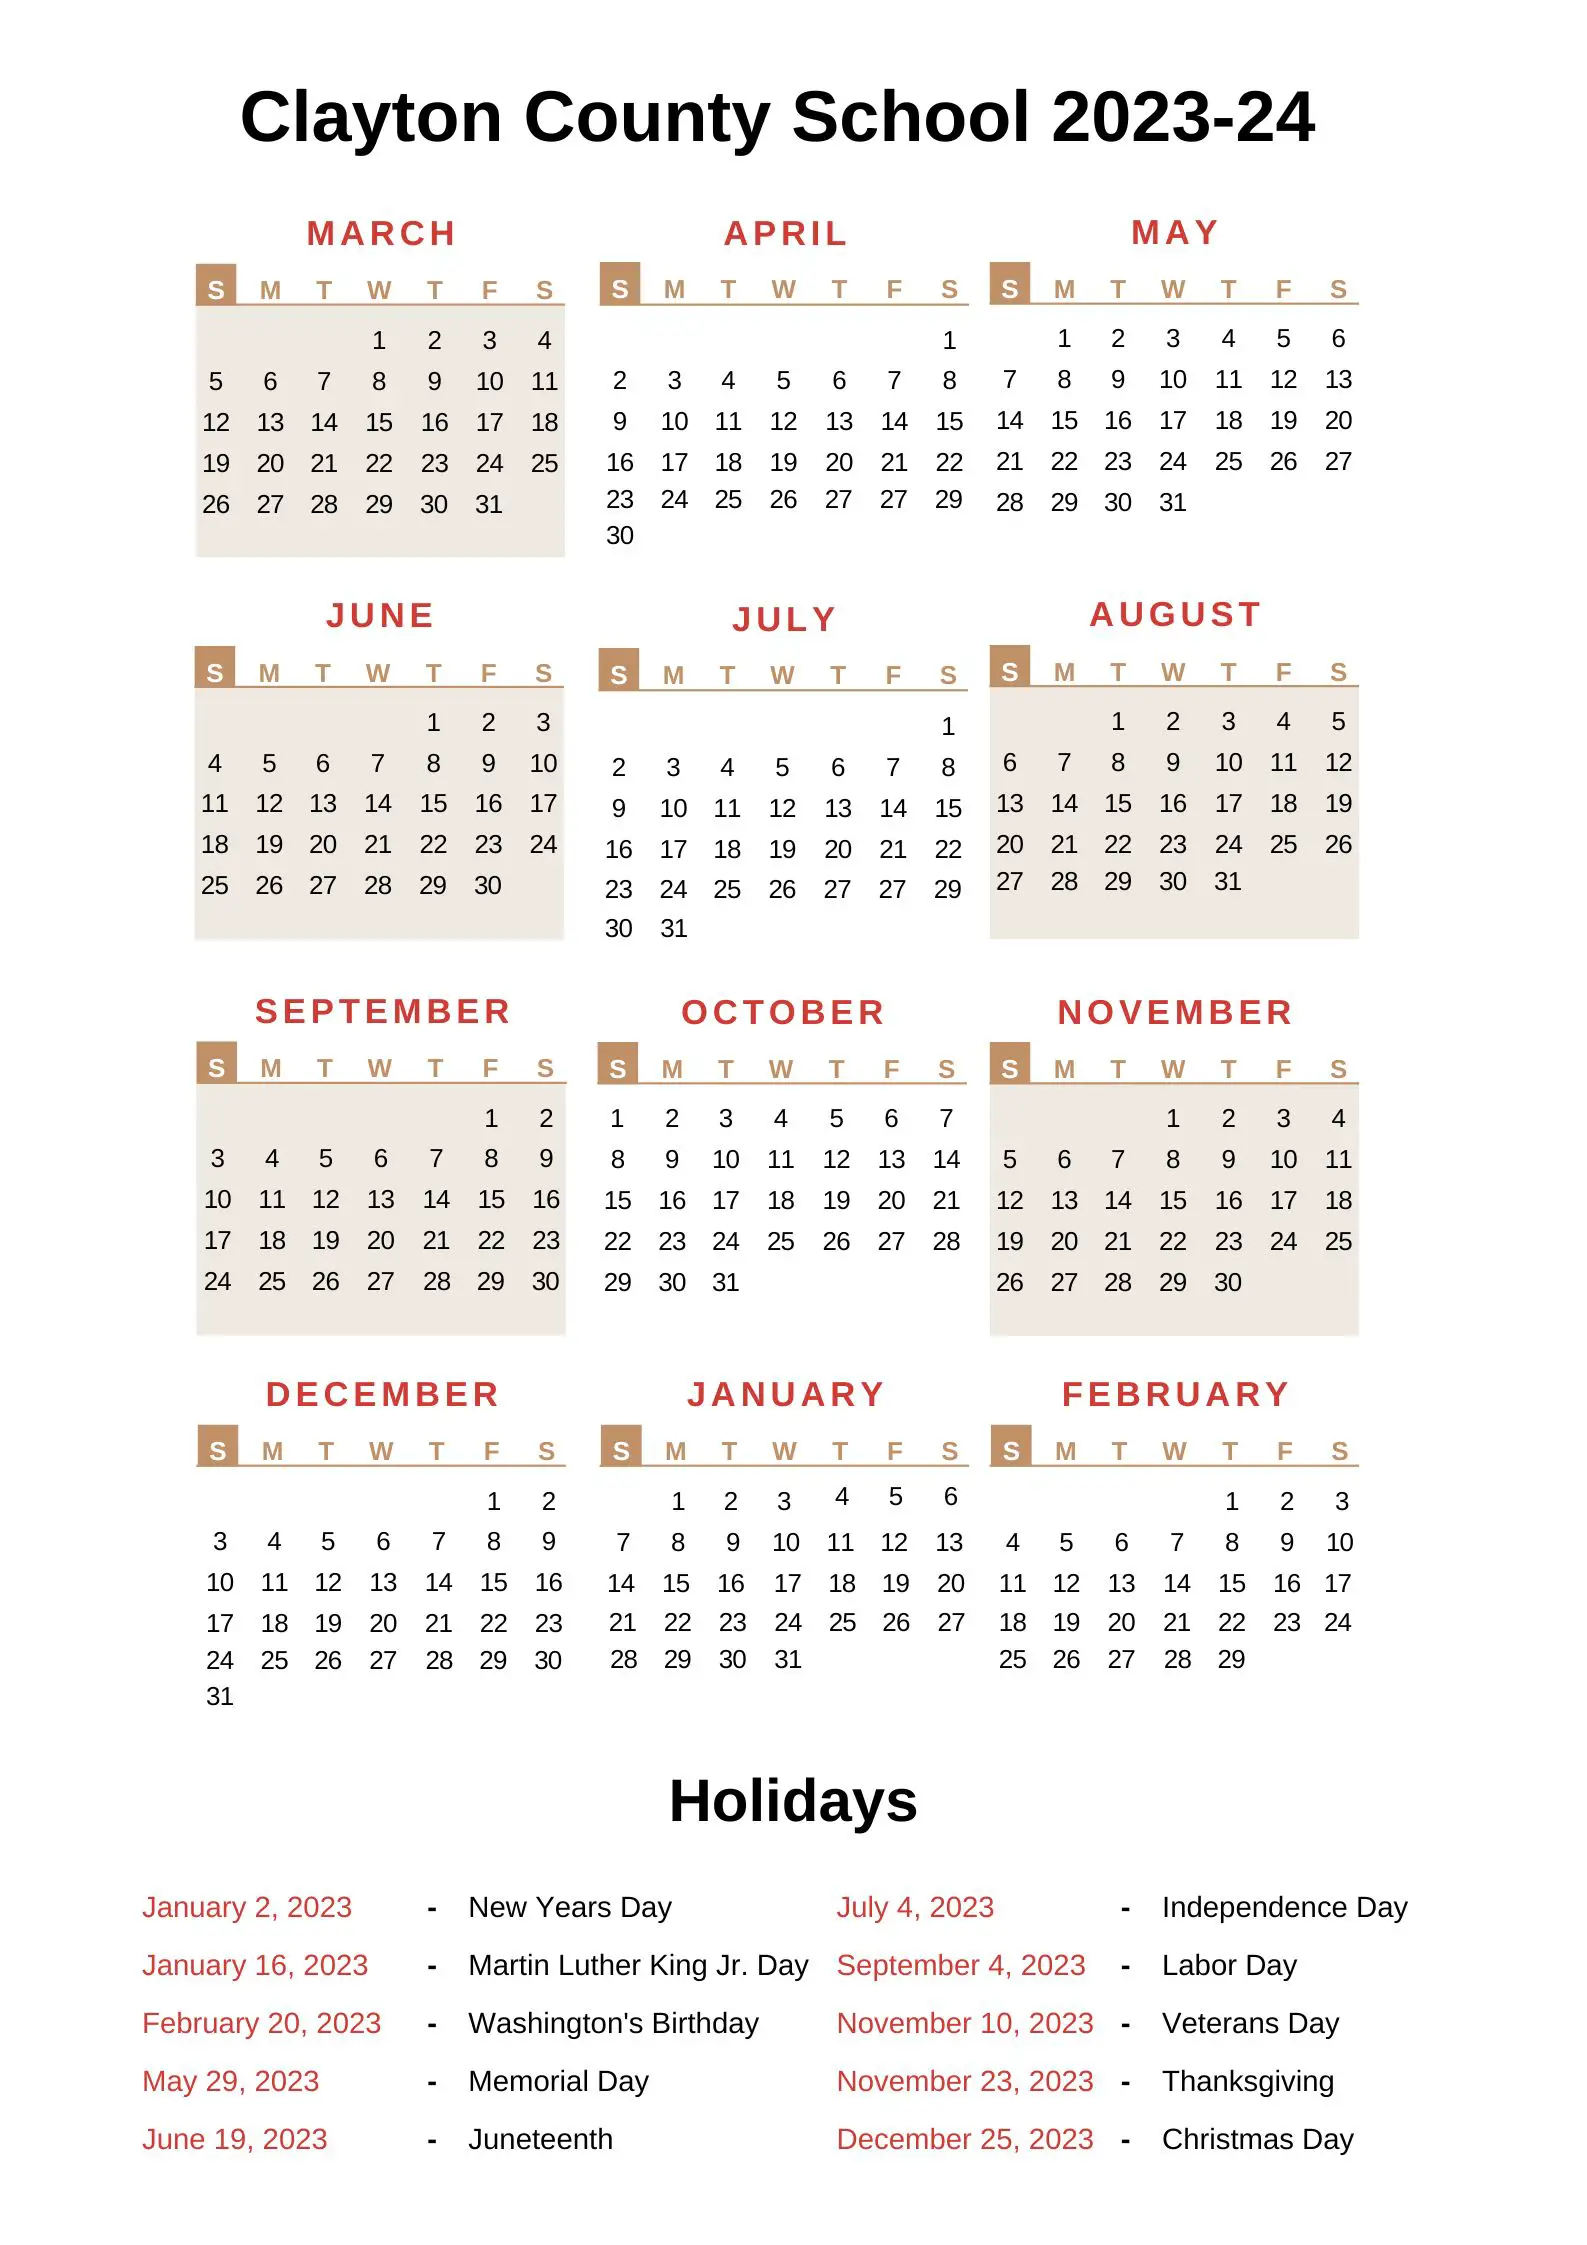 Clayton County Schools Calendar 202324 [CCS] with Holidays